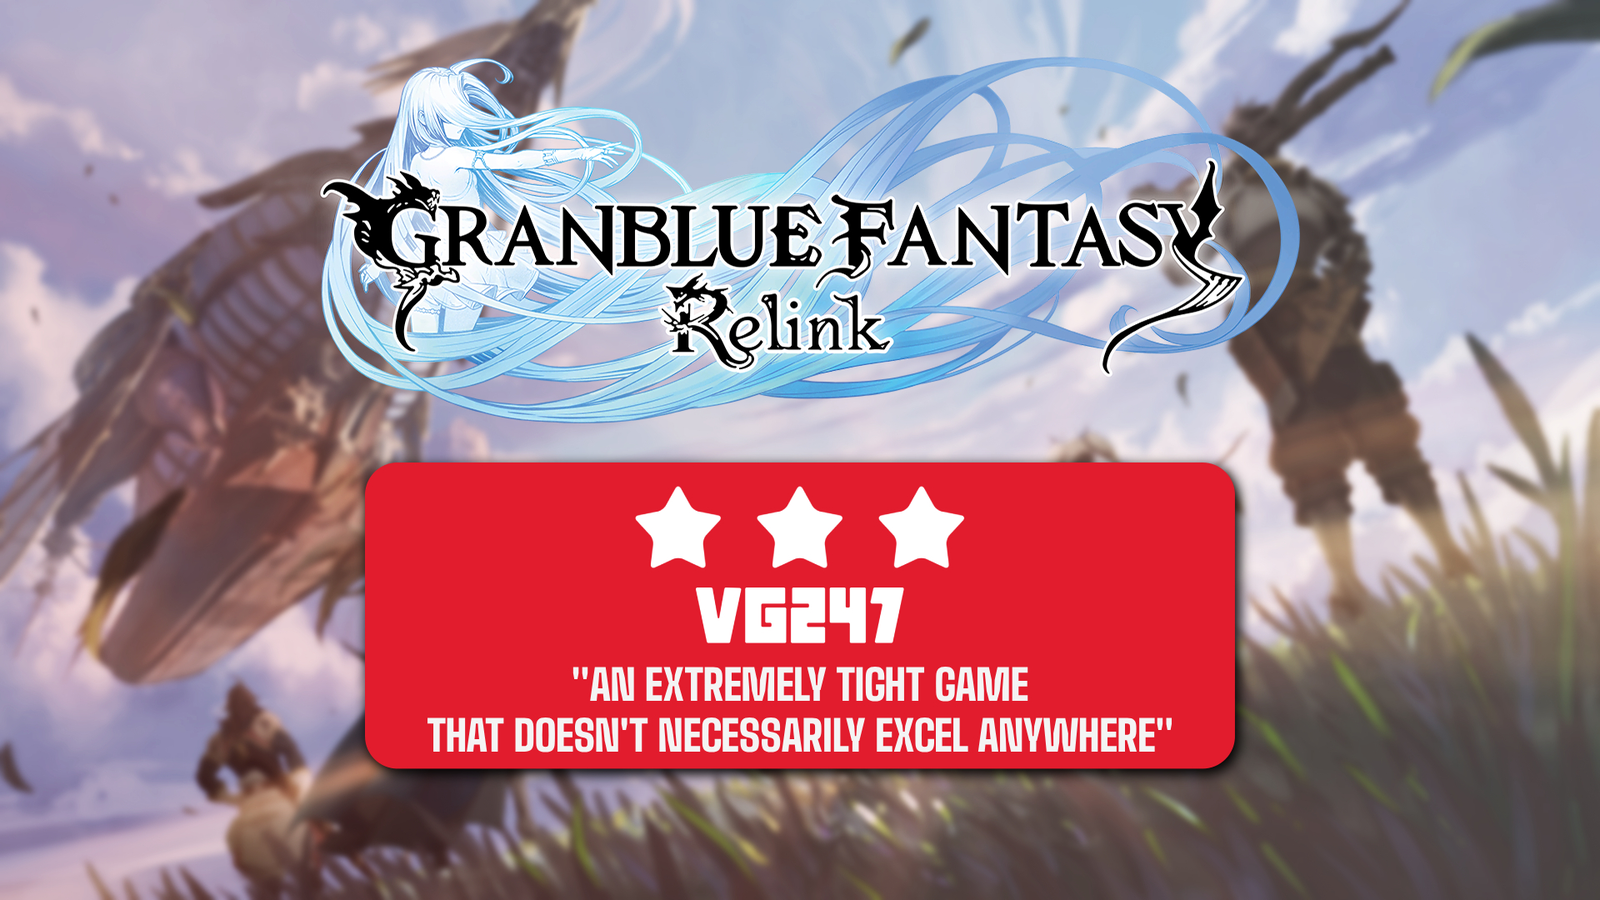 Granblue Fantasy: Relink review